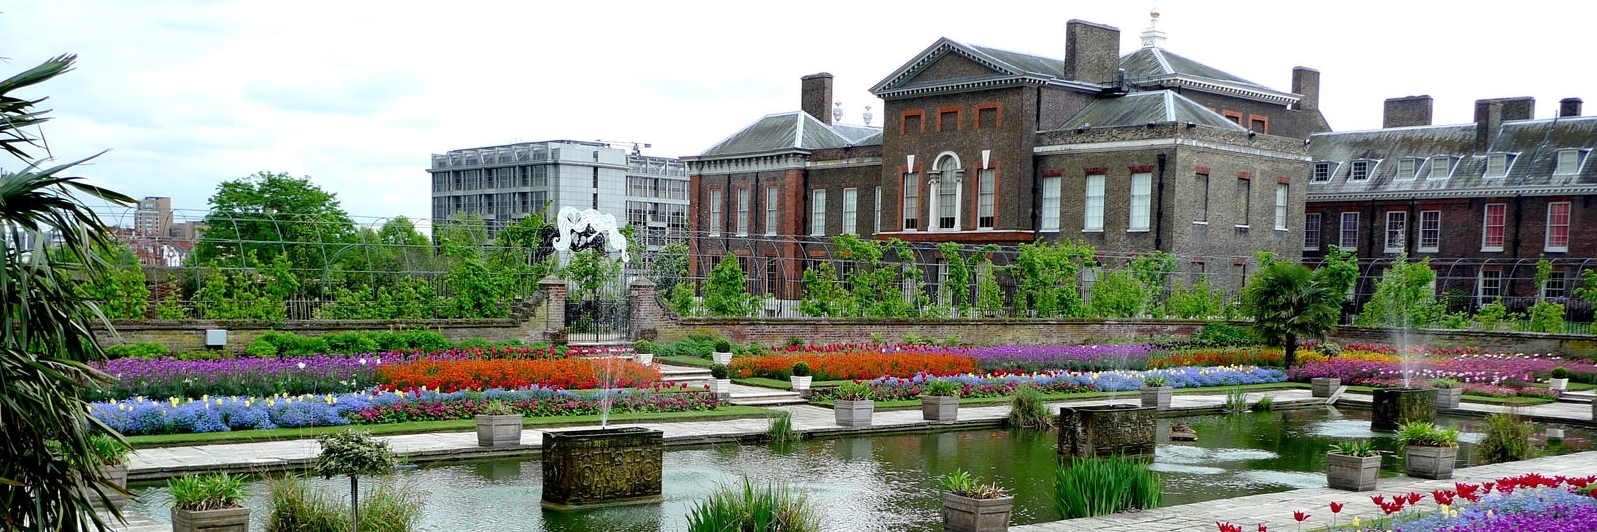 Vườn Kensington London (Kensington Gardens), London,...